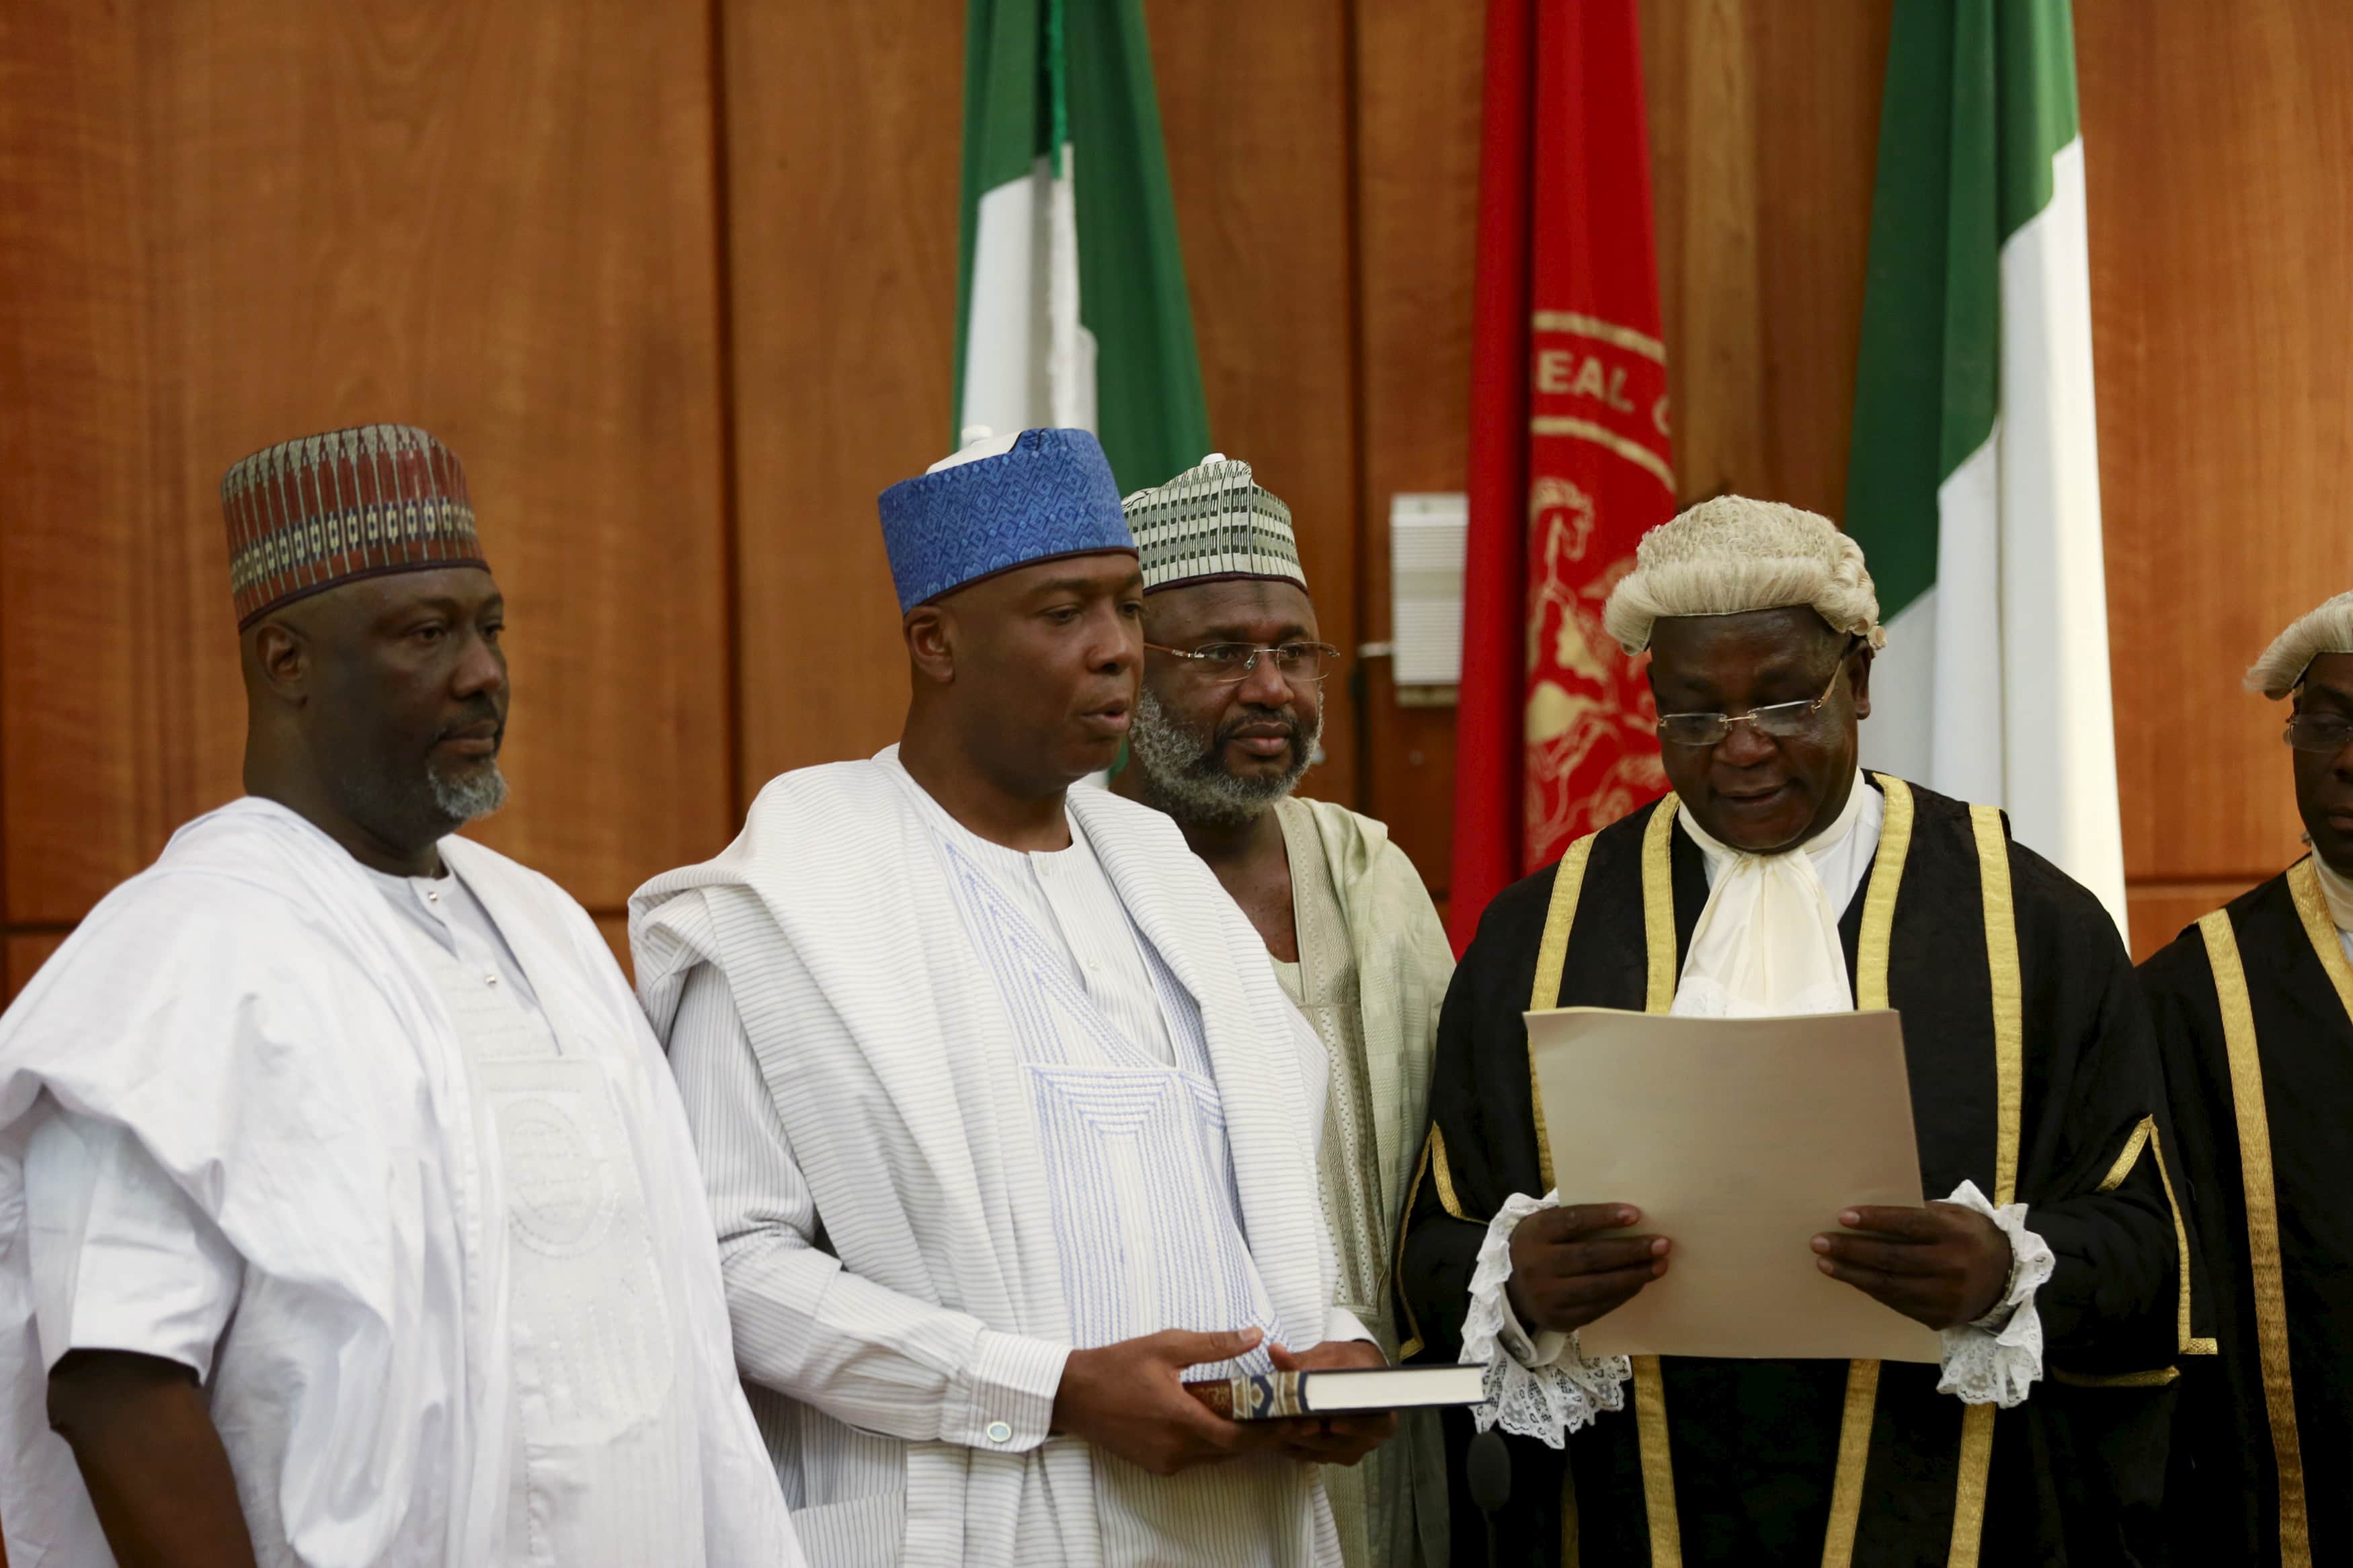 Bukola Saraki (2nd L) takes the oath of office as the senate president of the 8th Nigeria Assembly in Abuja, Nigeria, 9 June 2015, REUTERS/Afolabi Sotunde